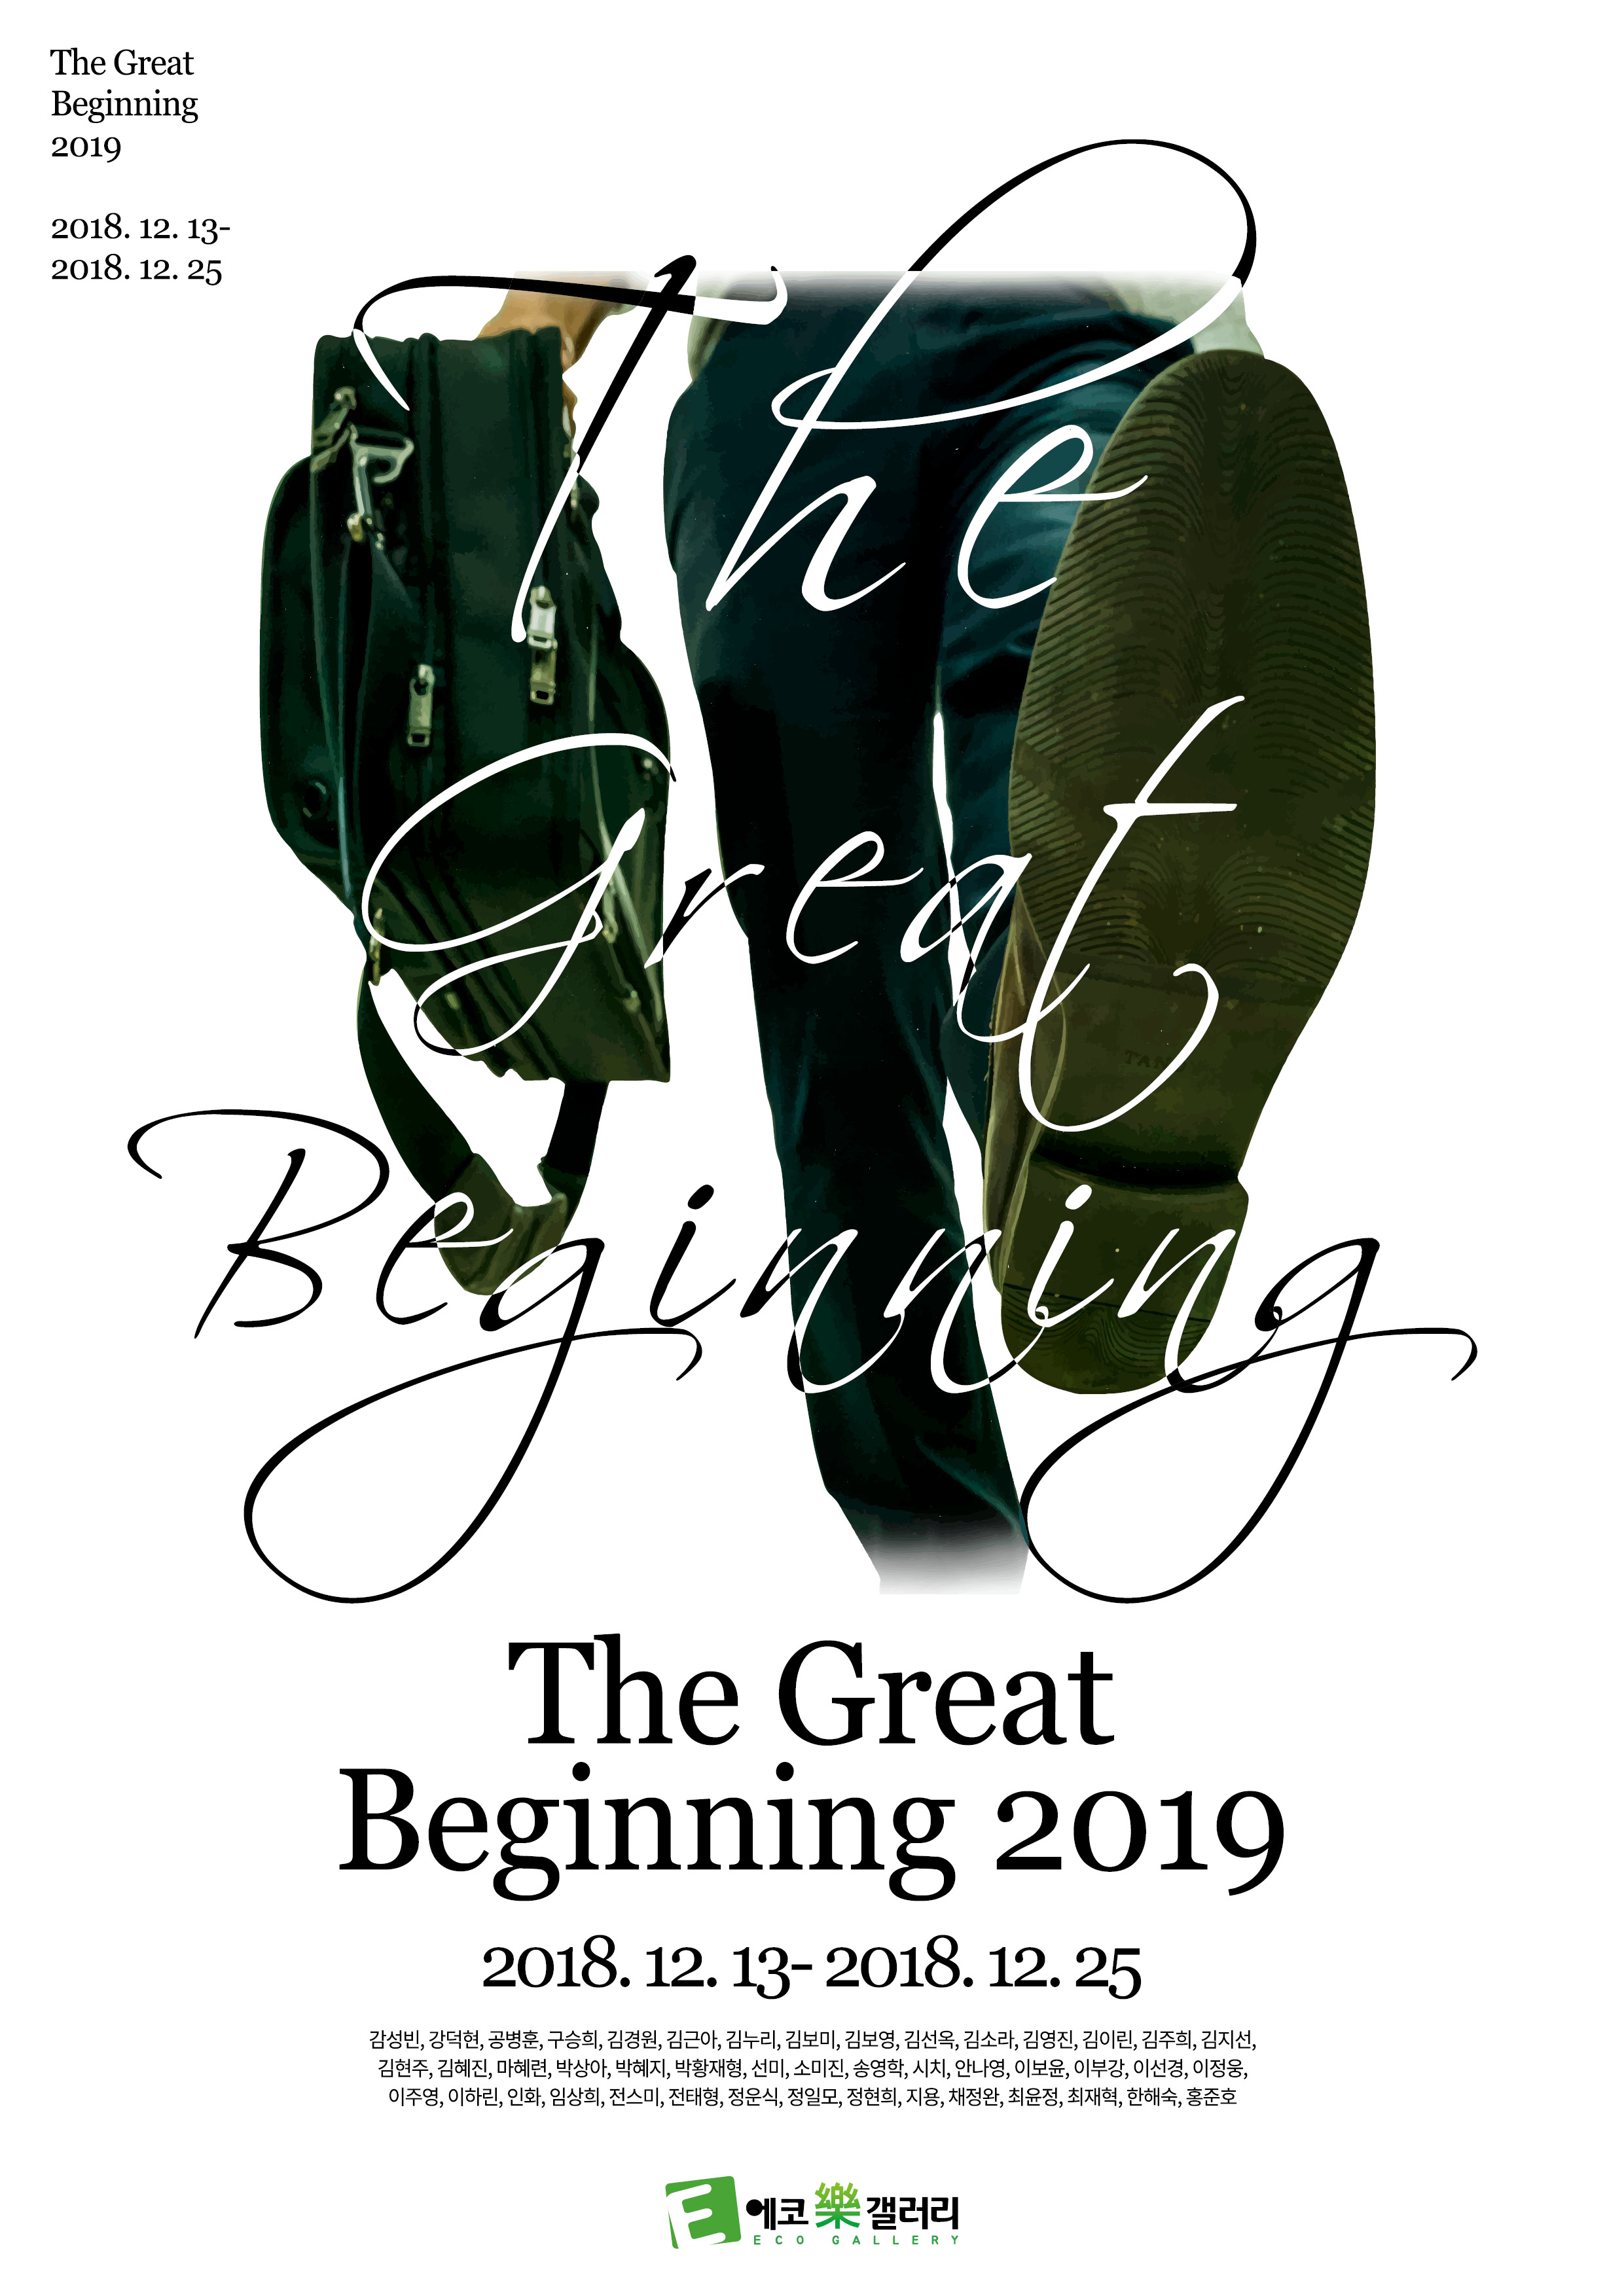 The great beginning 2019